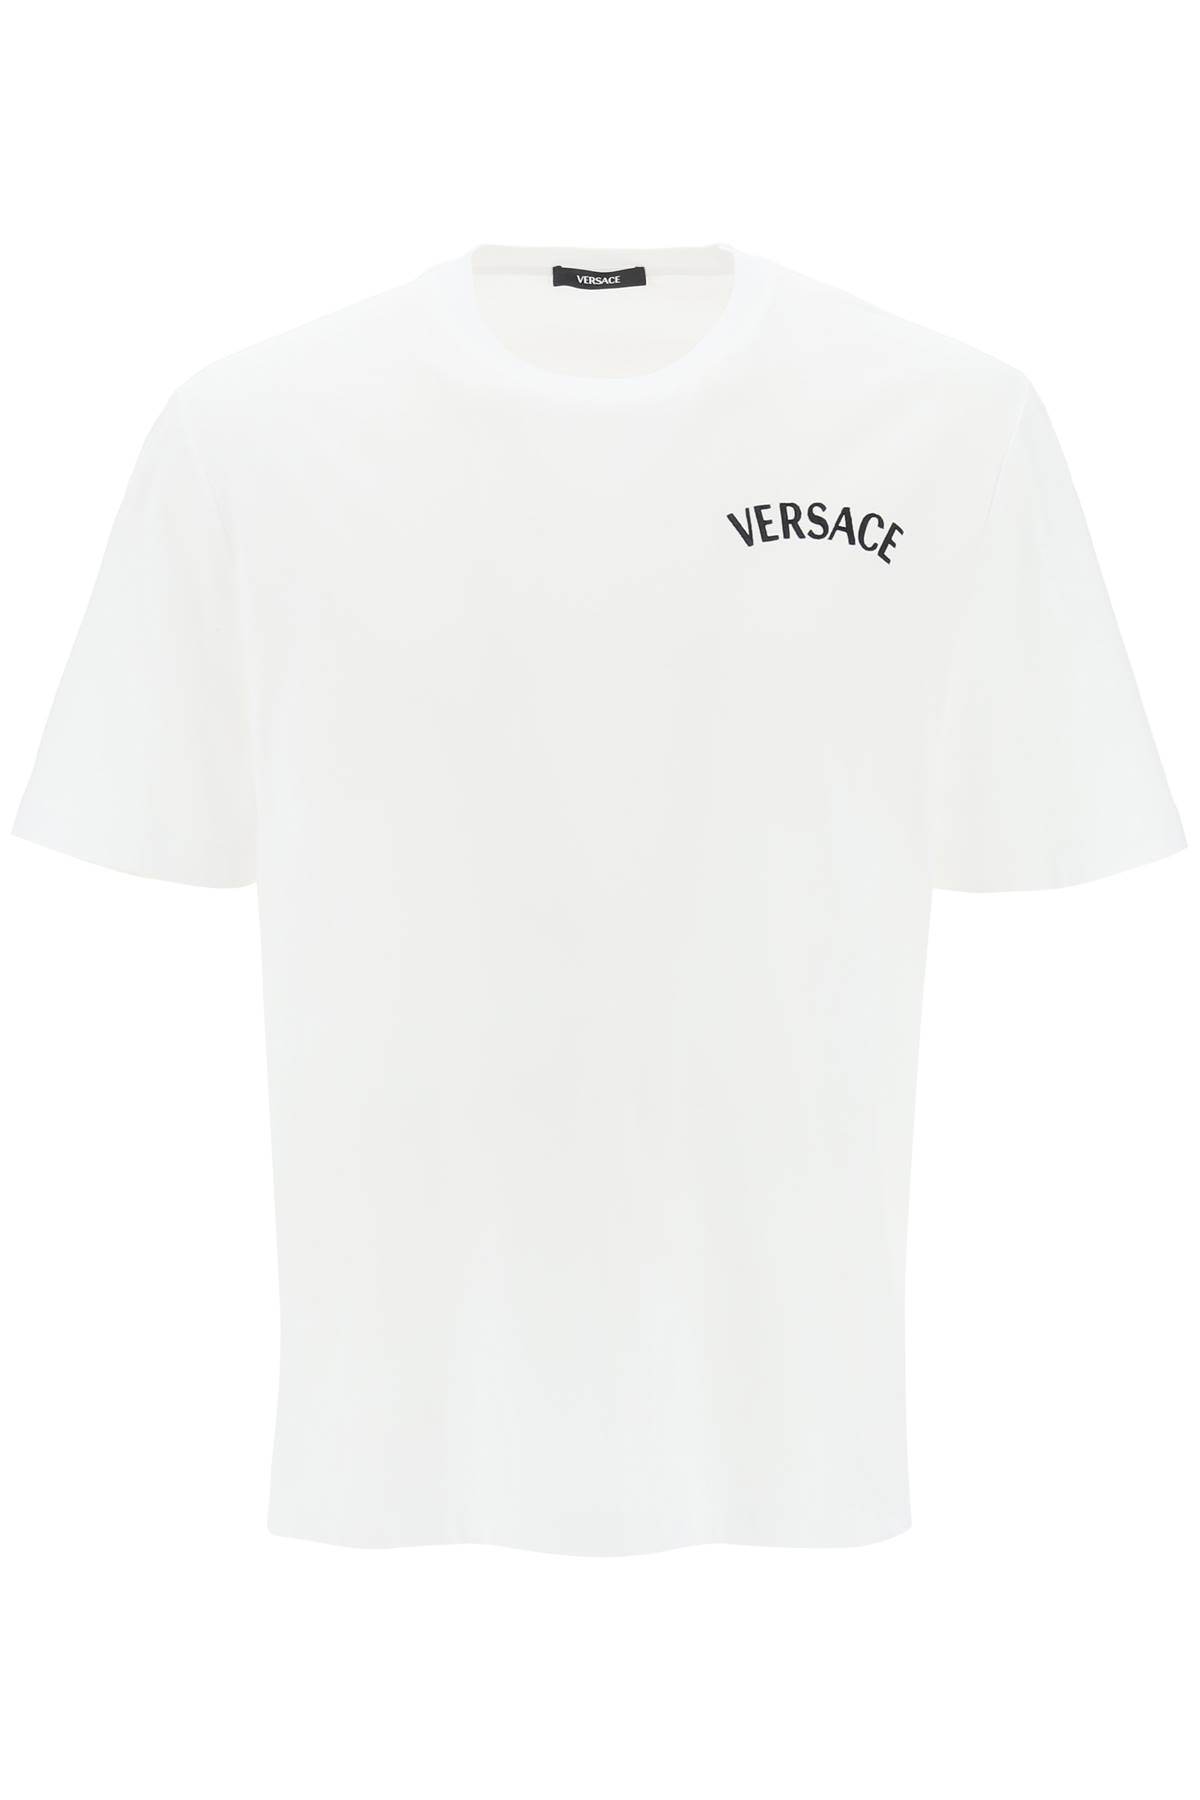 Versace VERSACE milano stamp crew-neck t-shirt